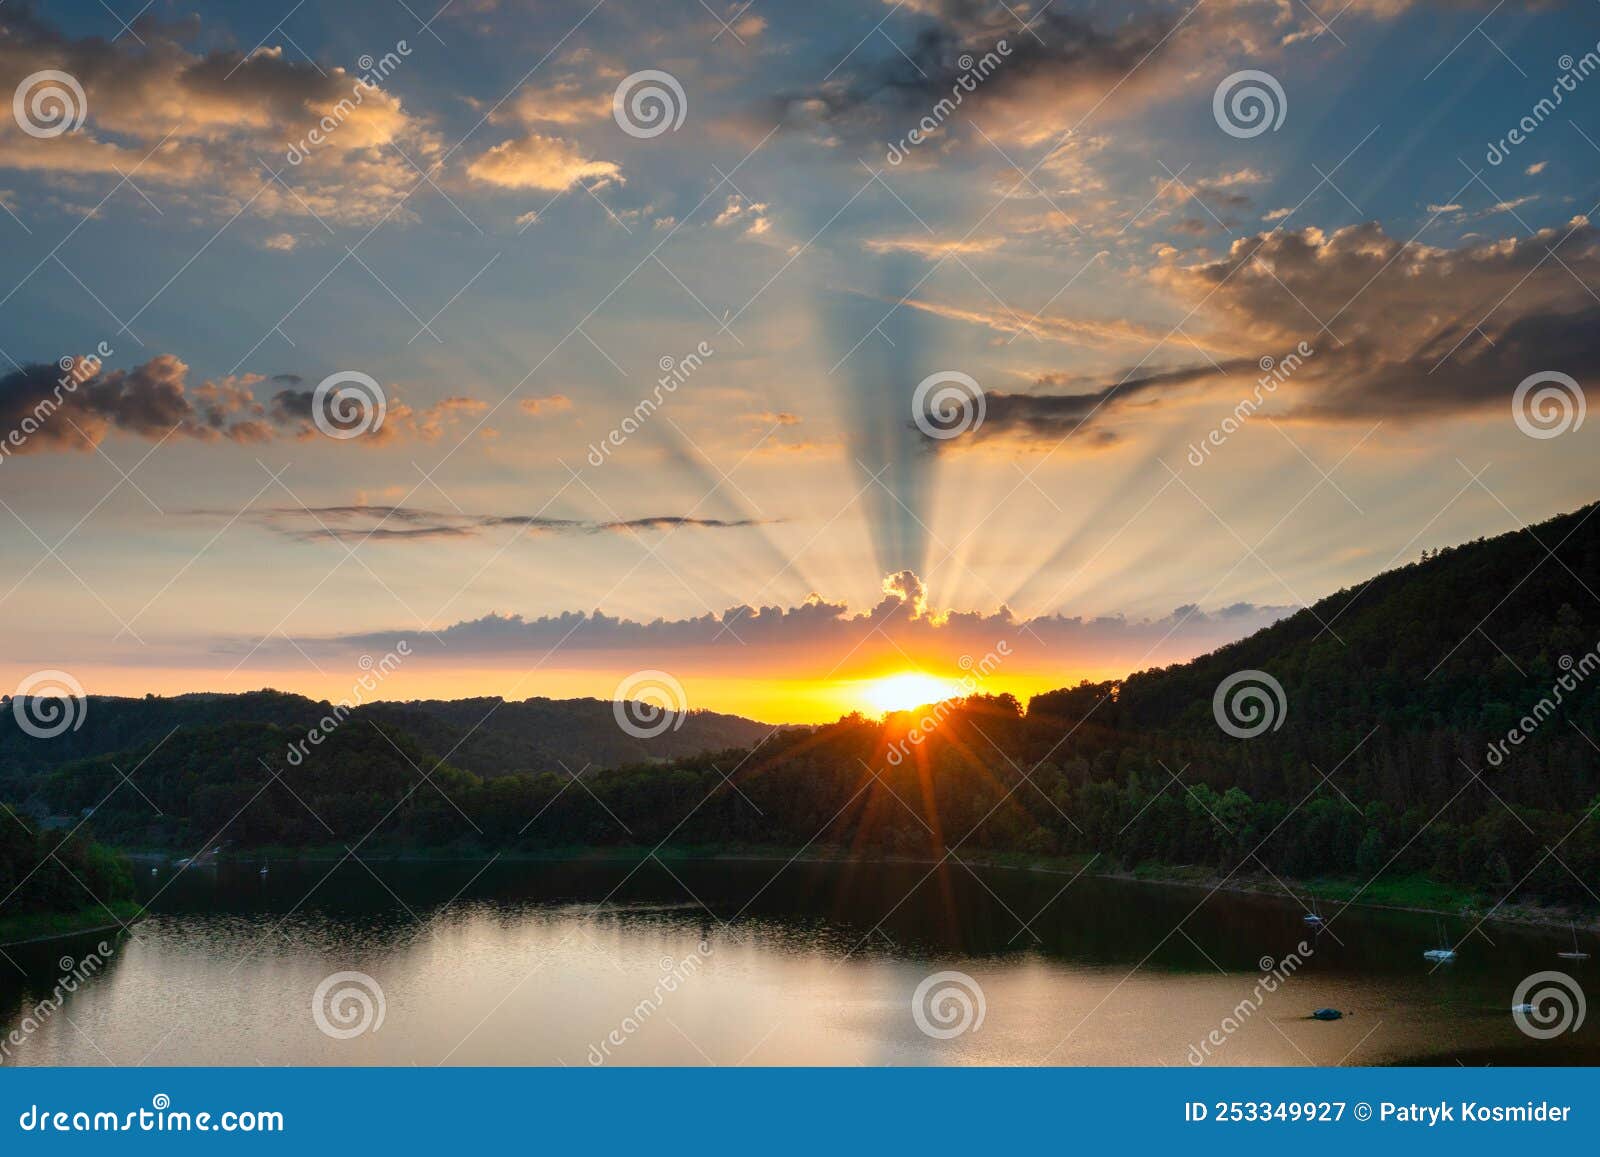 beautiful pilchowickie lake at sunset, lower silesia. poland